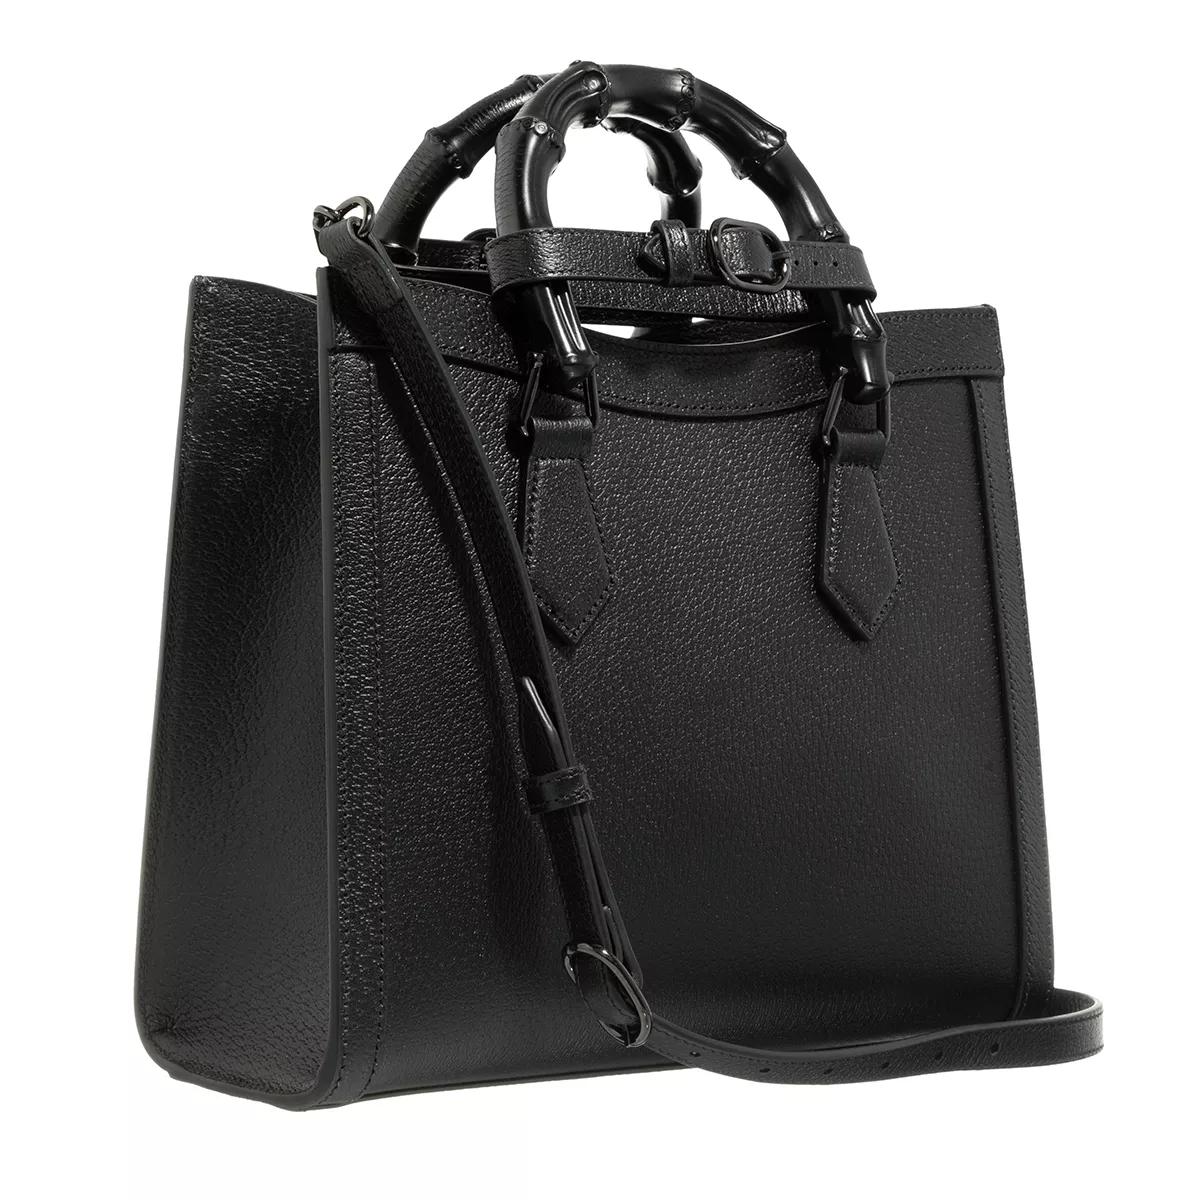 Gucci Totes Diana Small Tote Bag in zwart